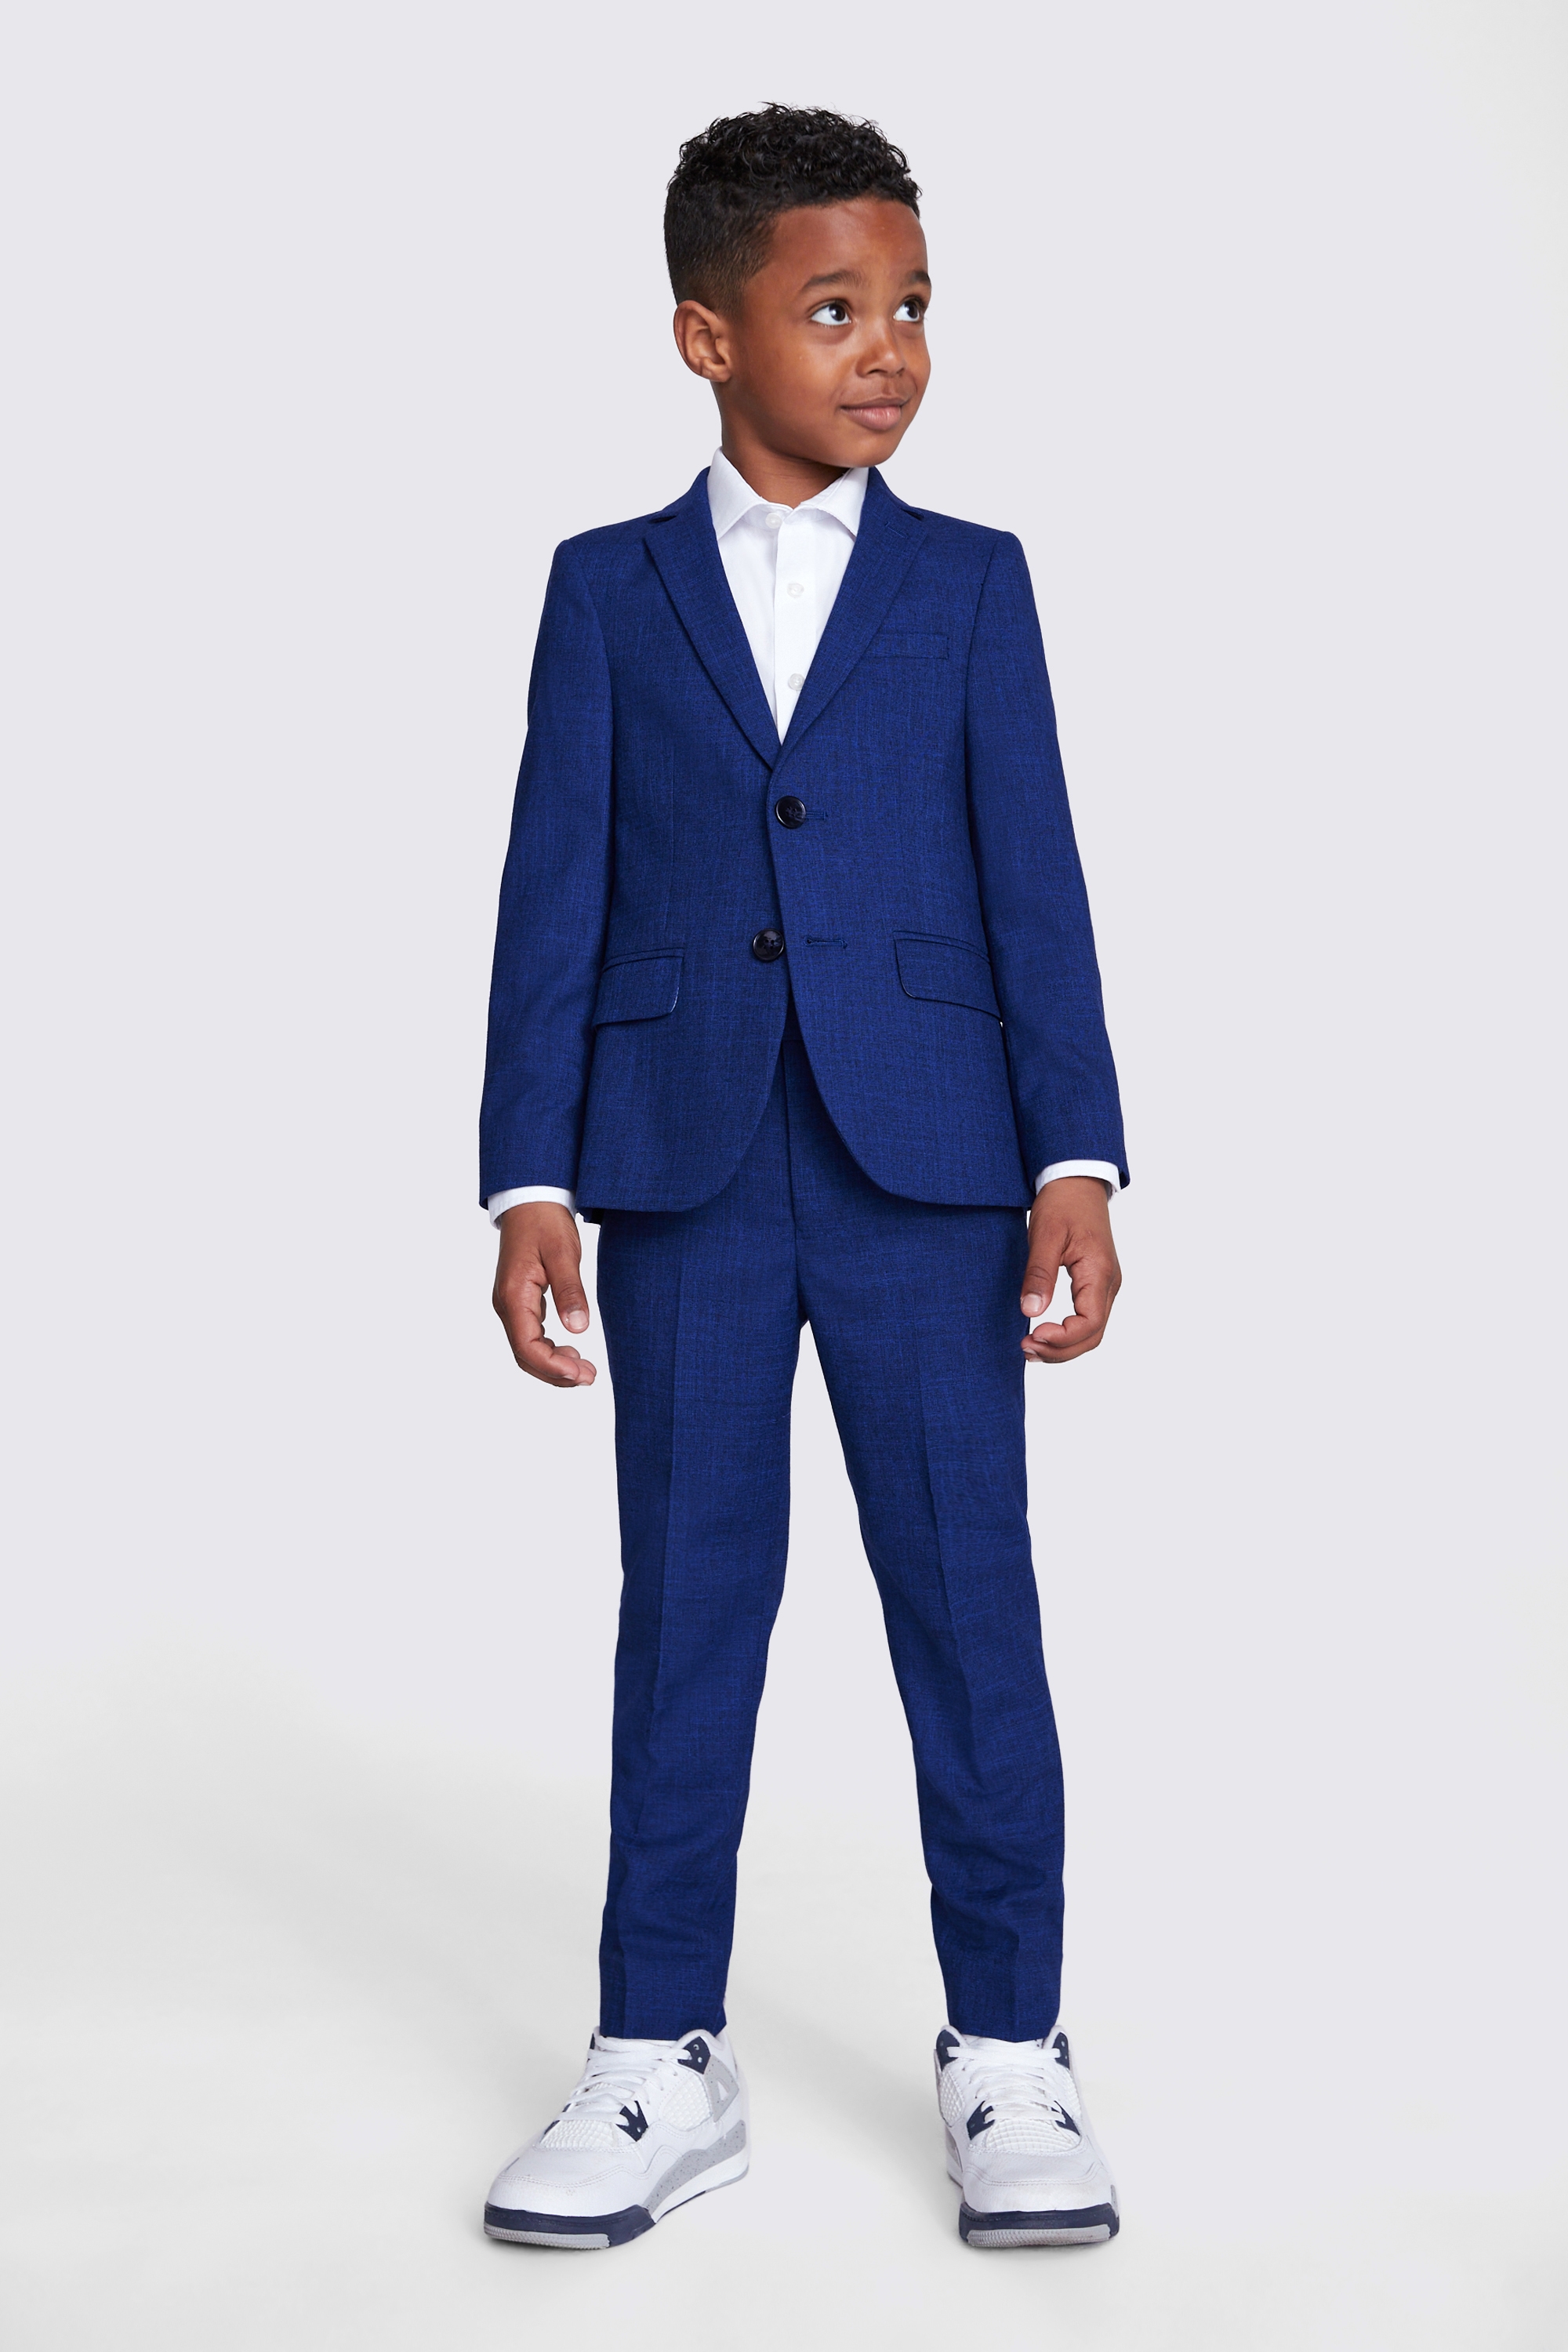 Boys Blue Slub Jacket | Buy Online at Moss